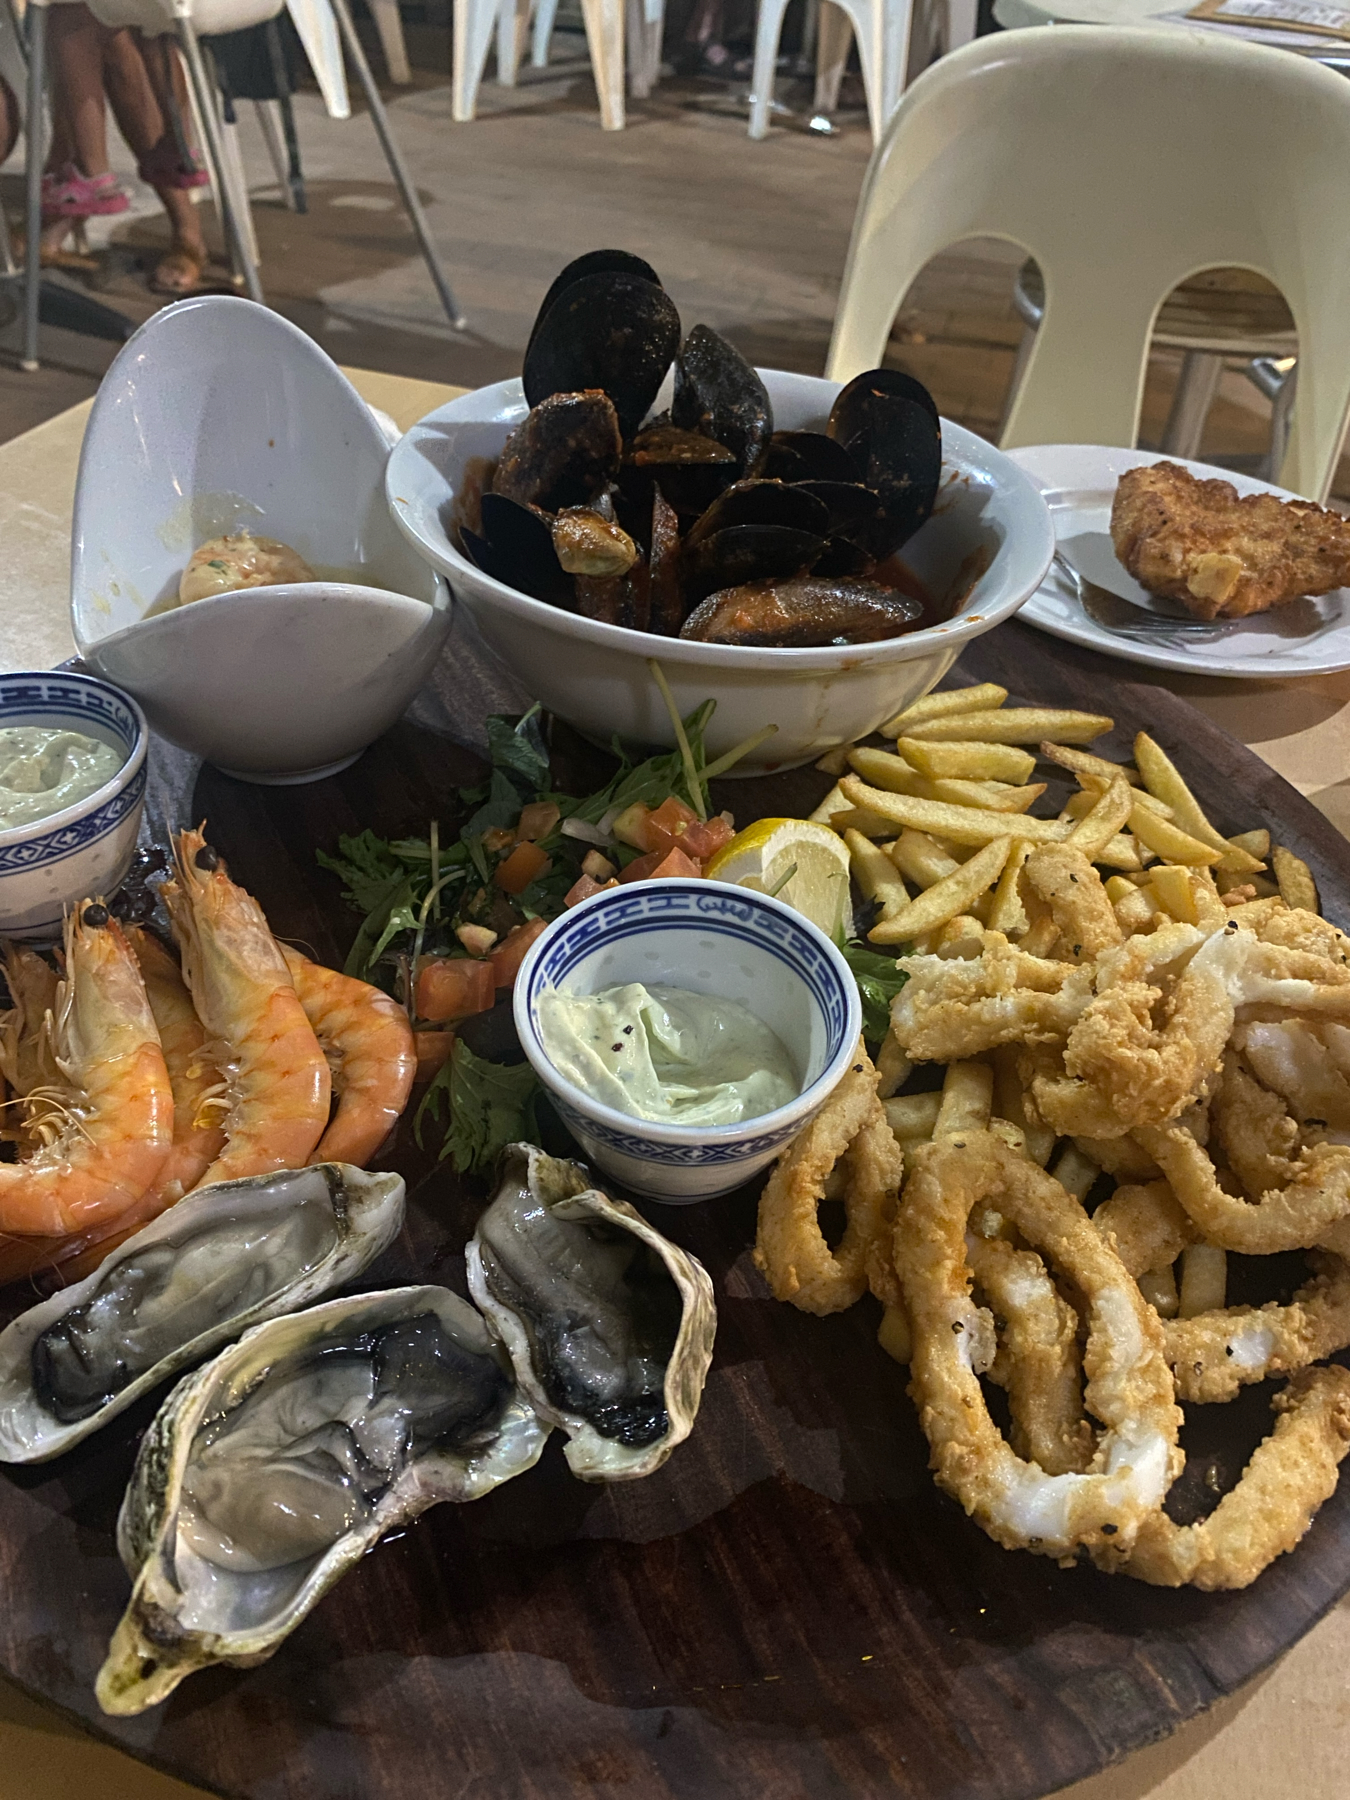 A rewarding seafood platter